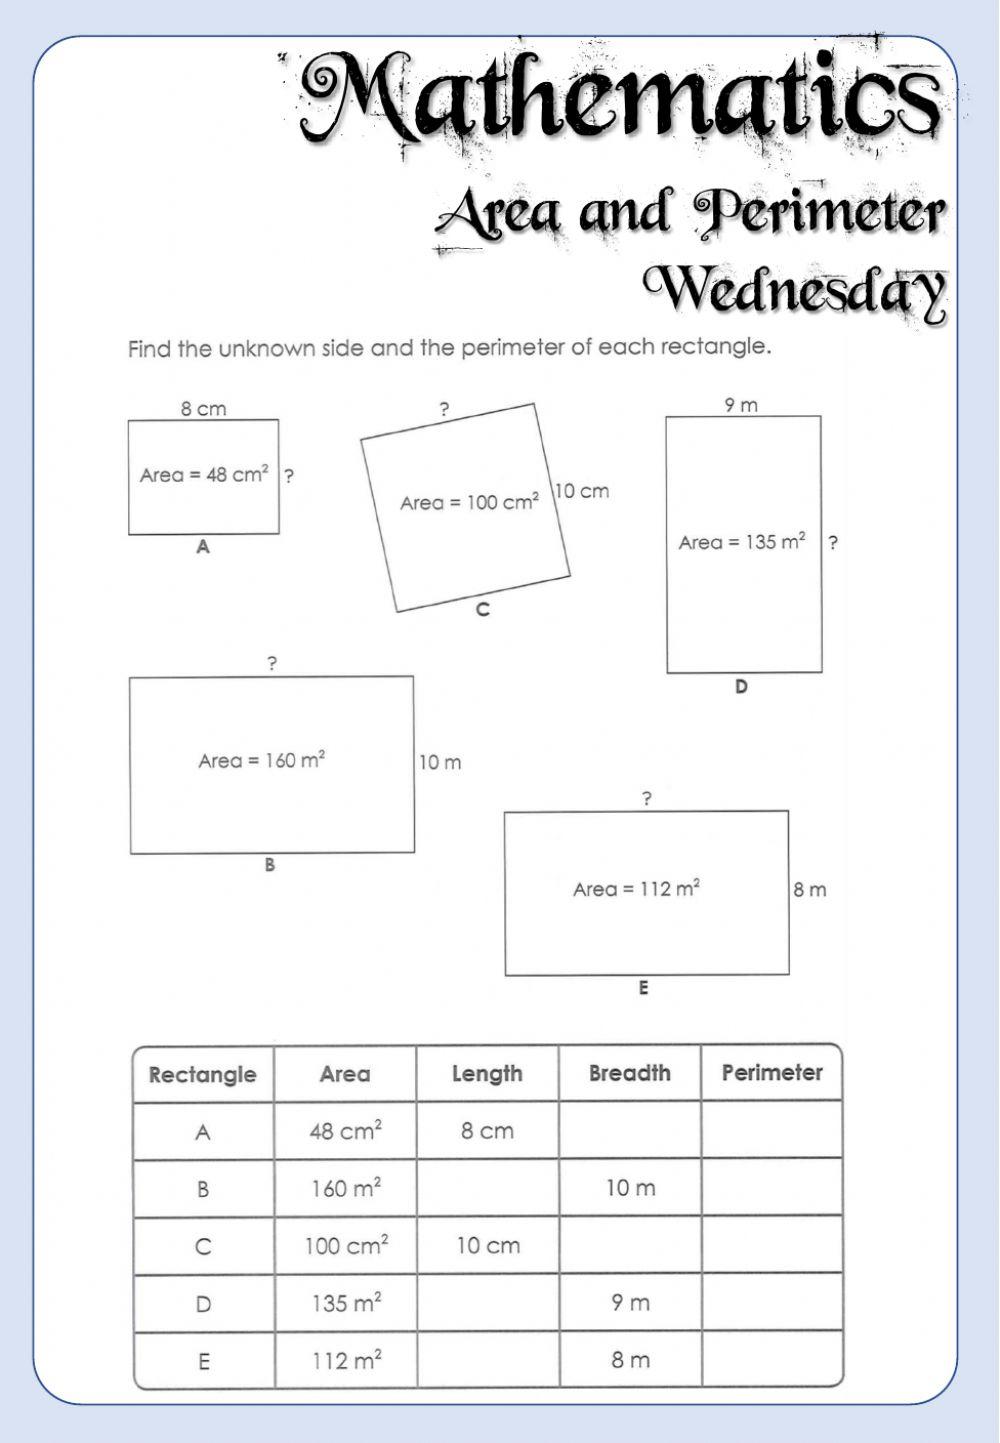 Week 23 - Mathematics - Wednesday 6